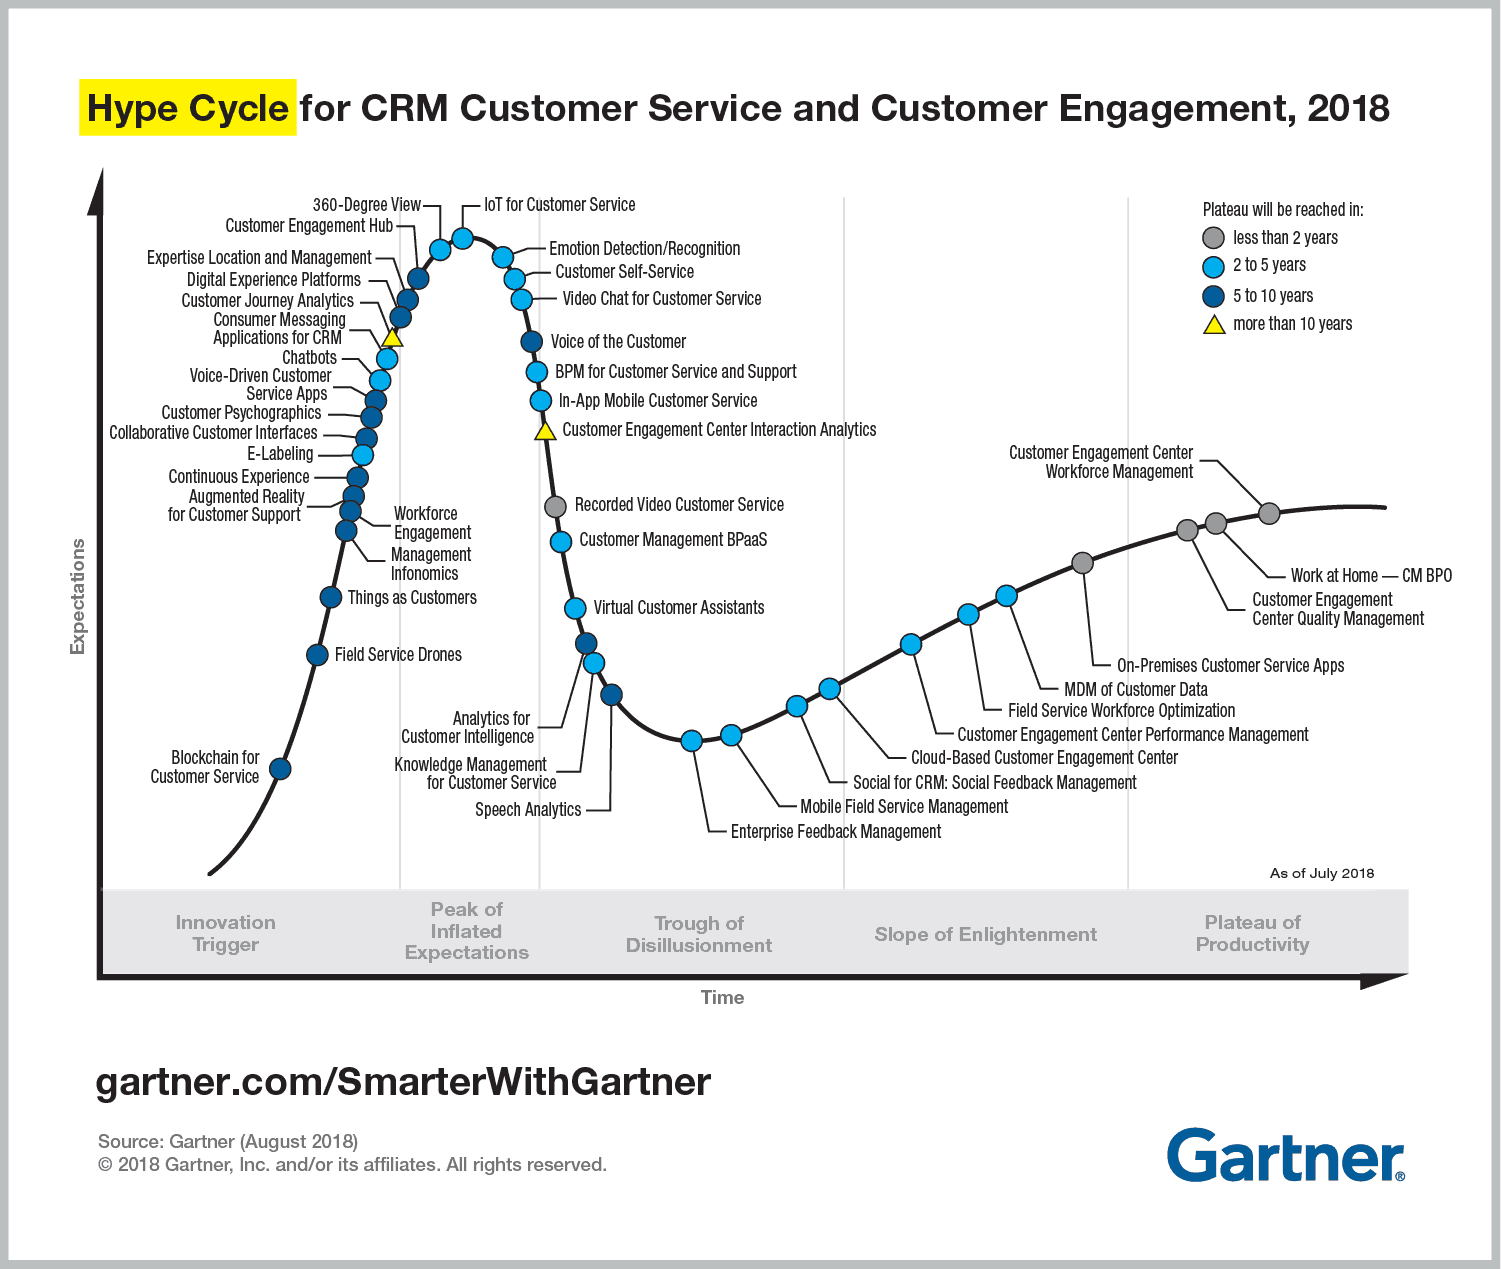 gartner-hype-cycle-for-crm-customer-service